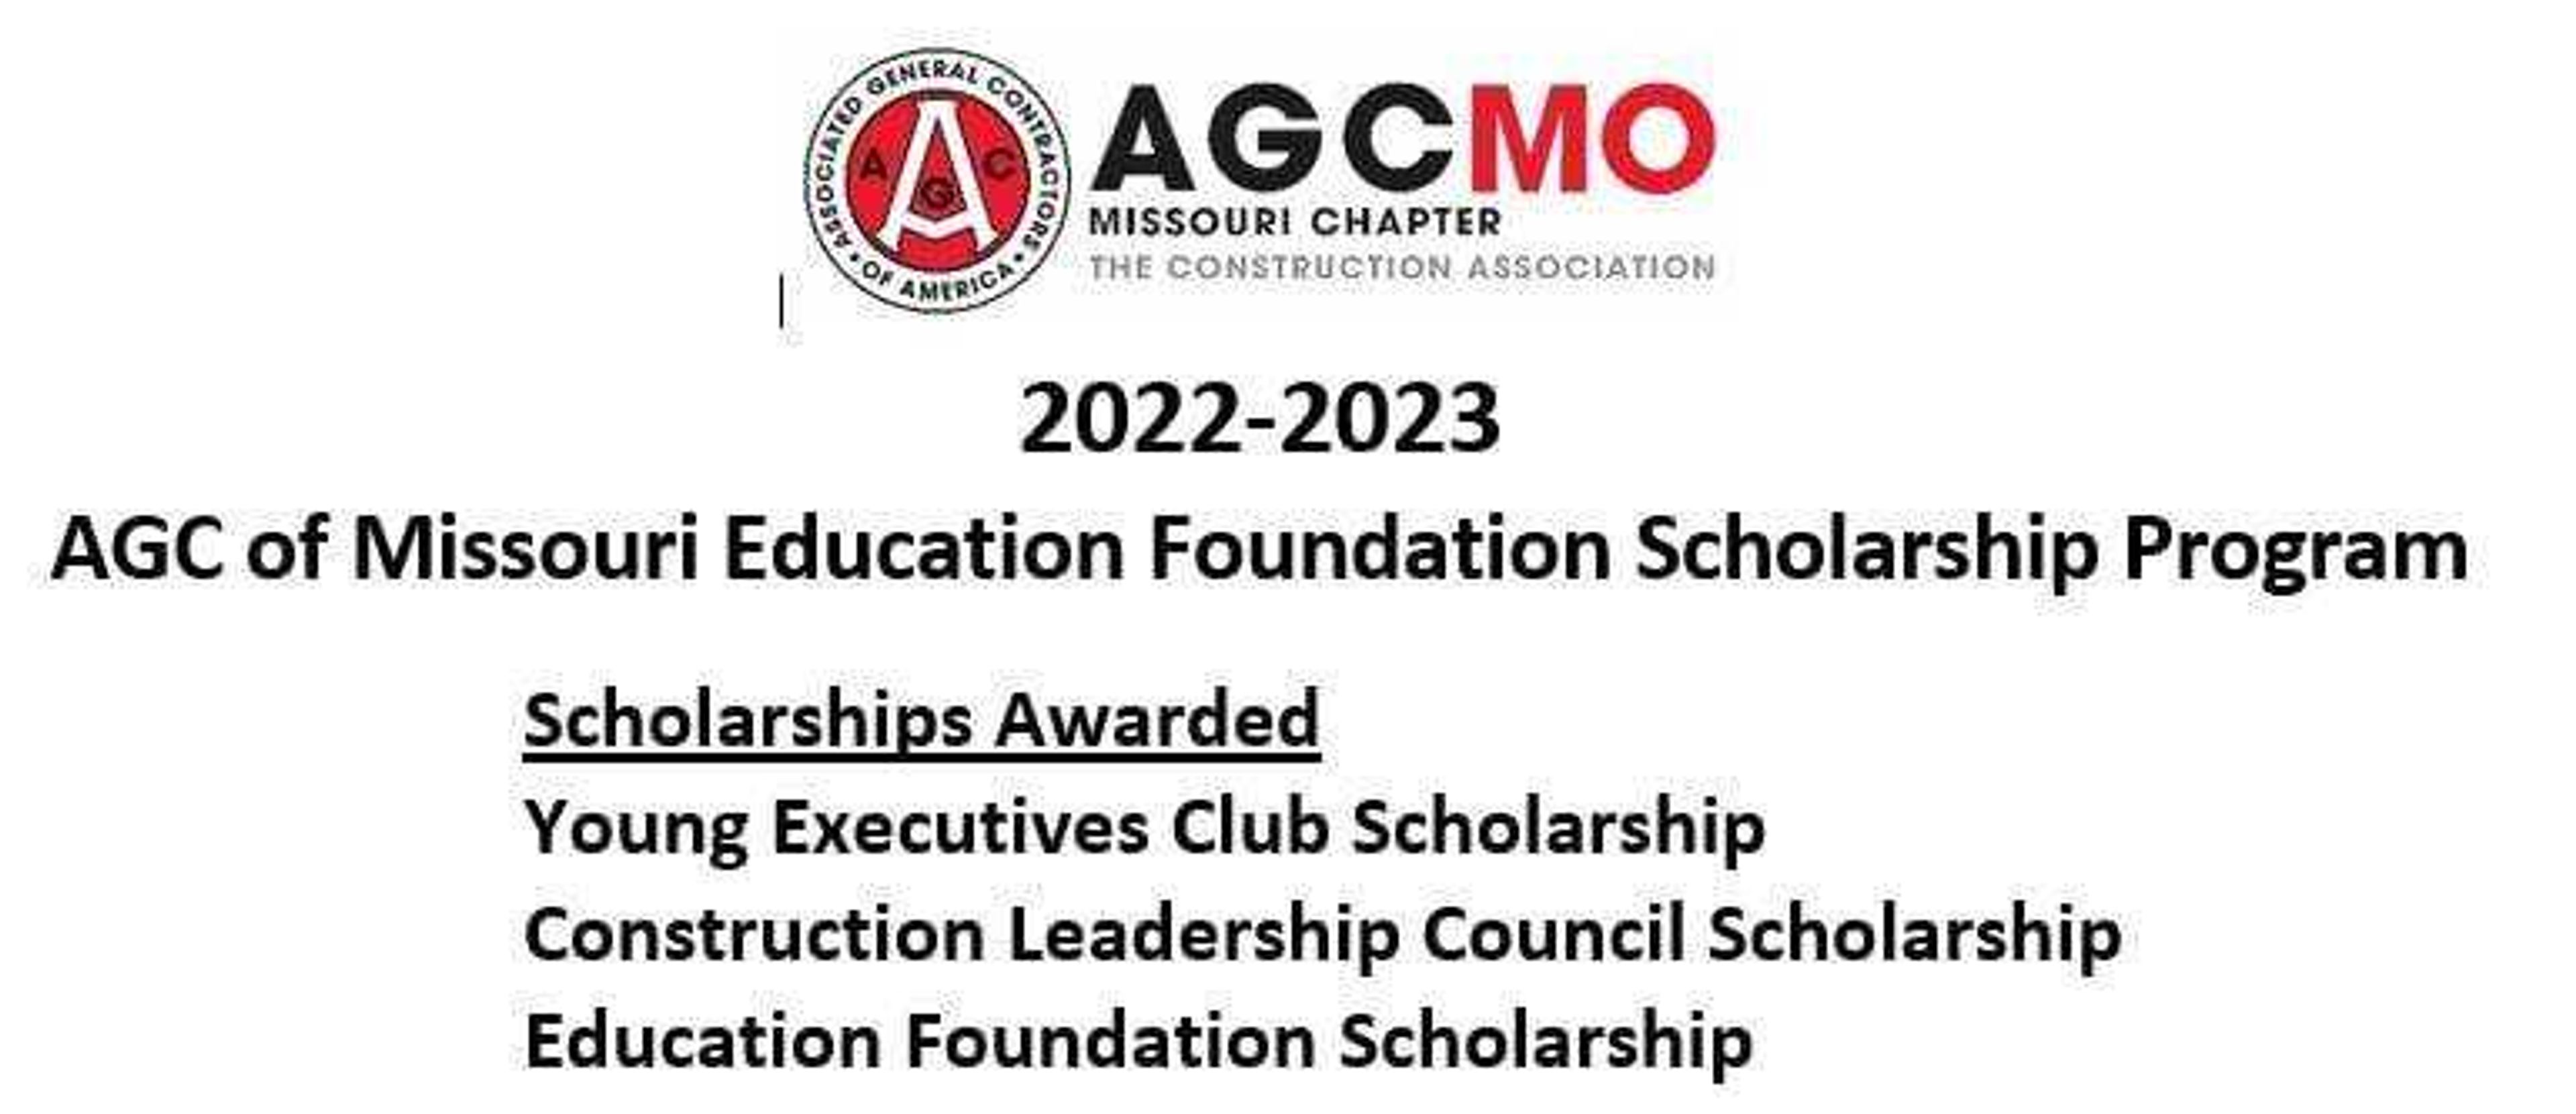 AGC of Missouri Education Foundation Scholarship Program for the 2022-23 school year.